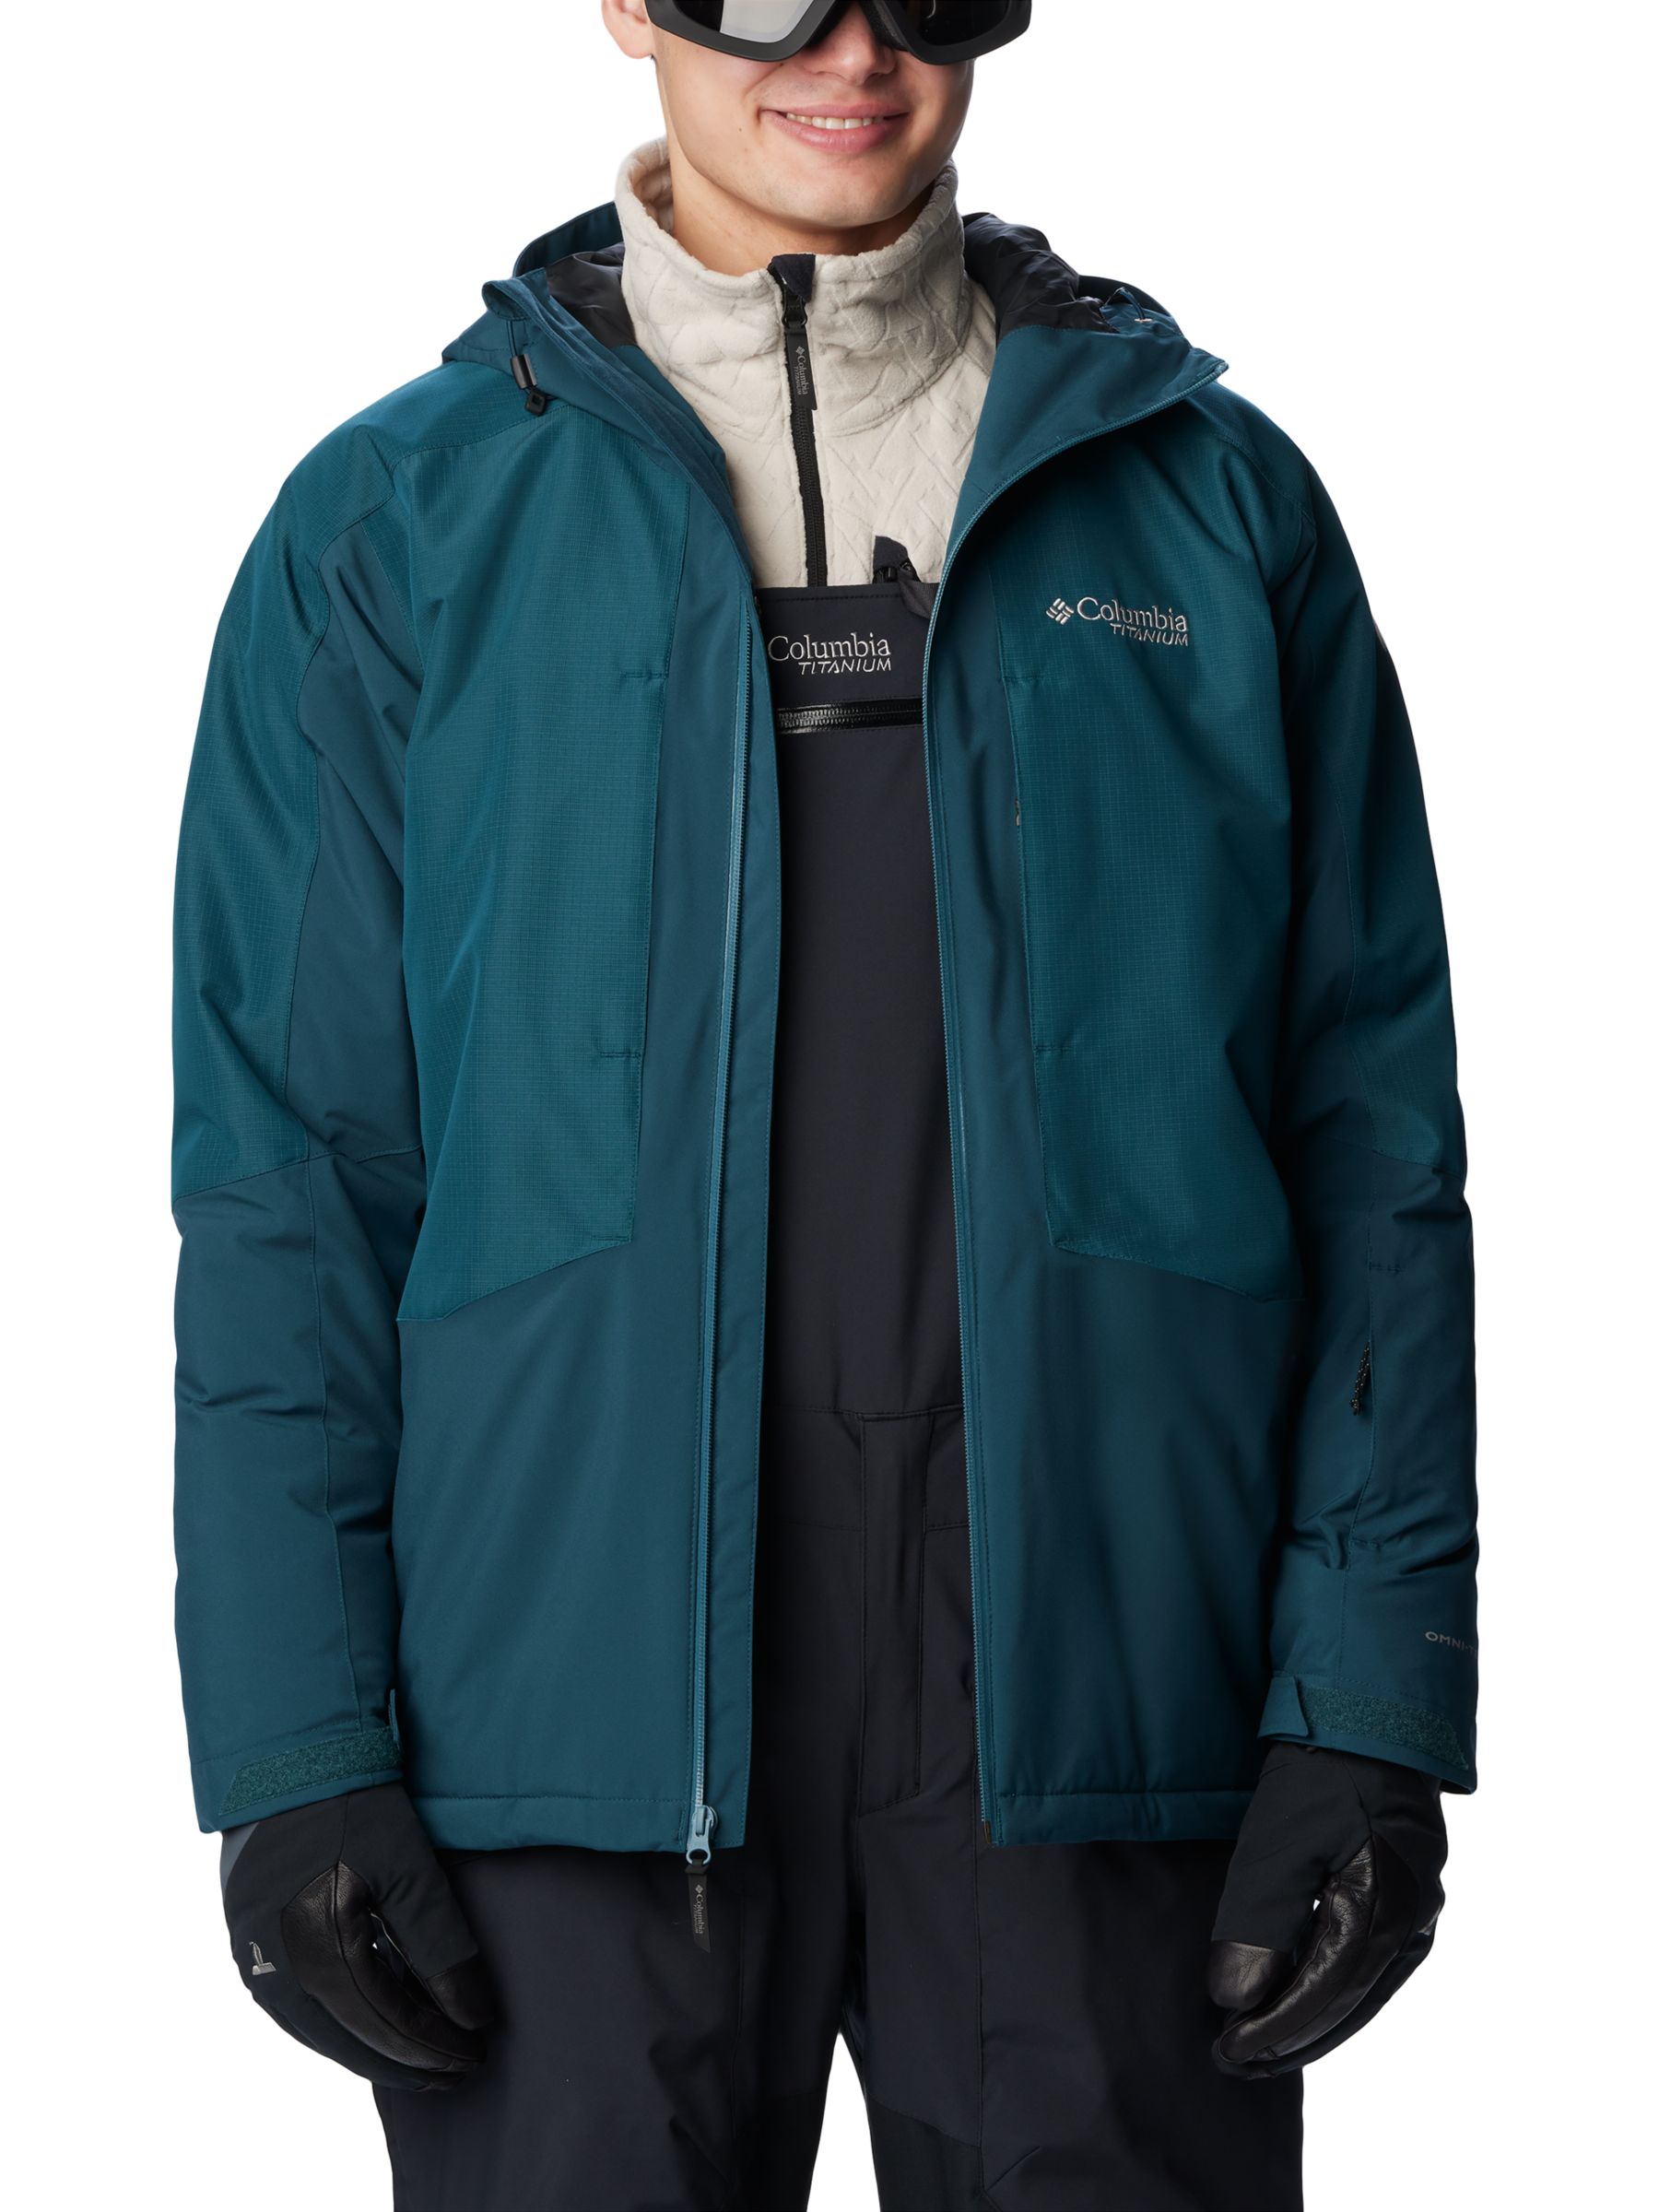 Columbia Bird Mountain Insulated Jacket Black - Snowfit